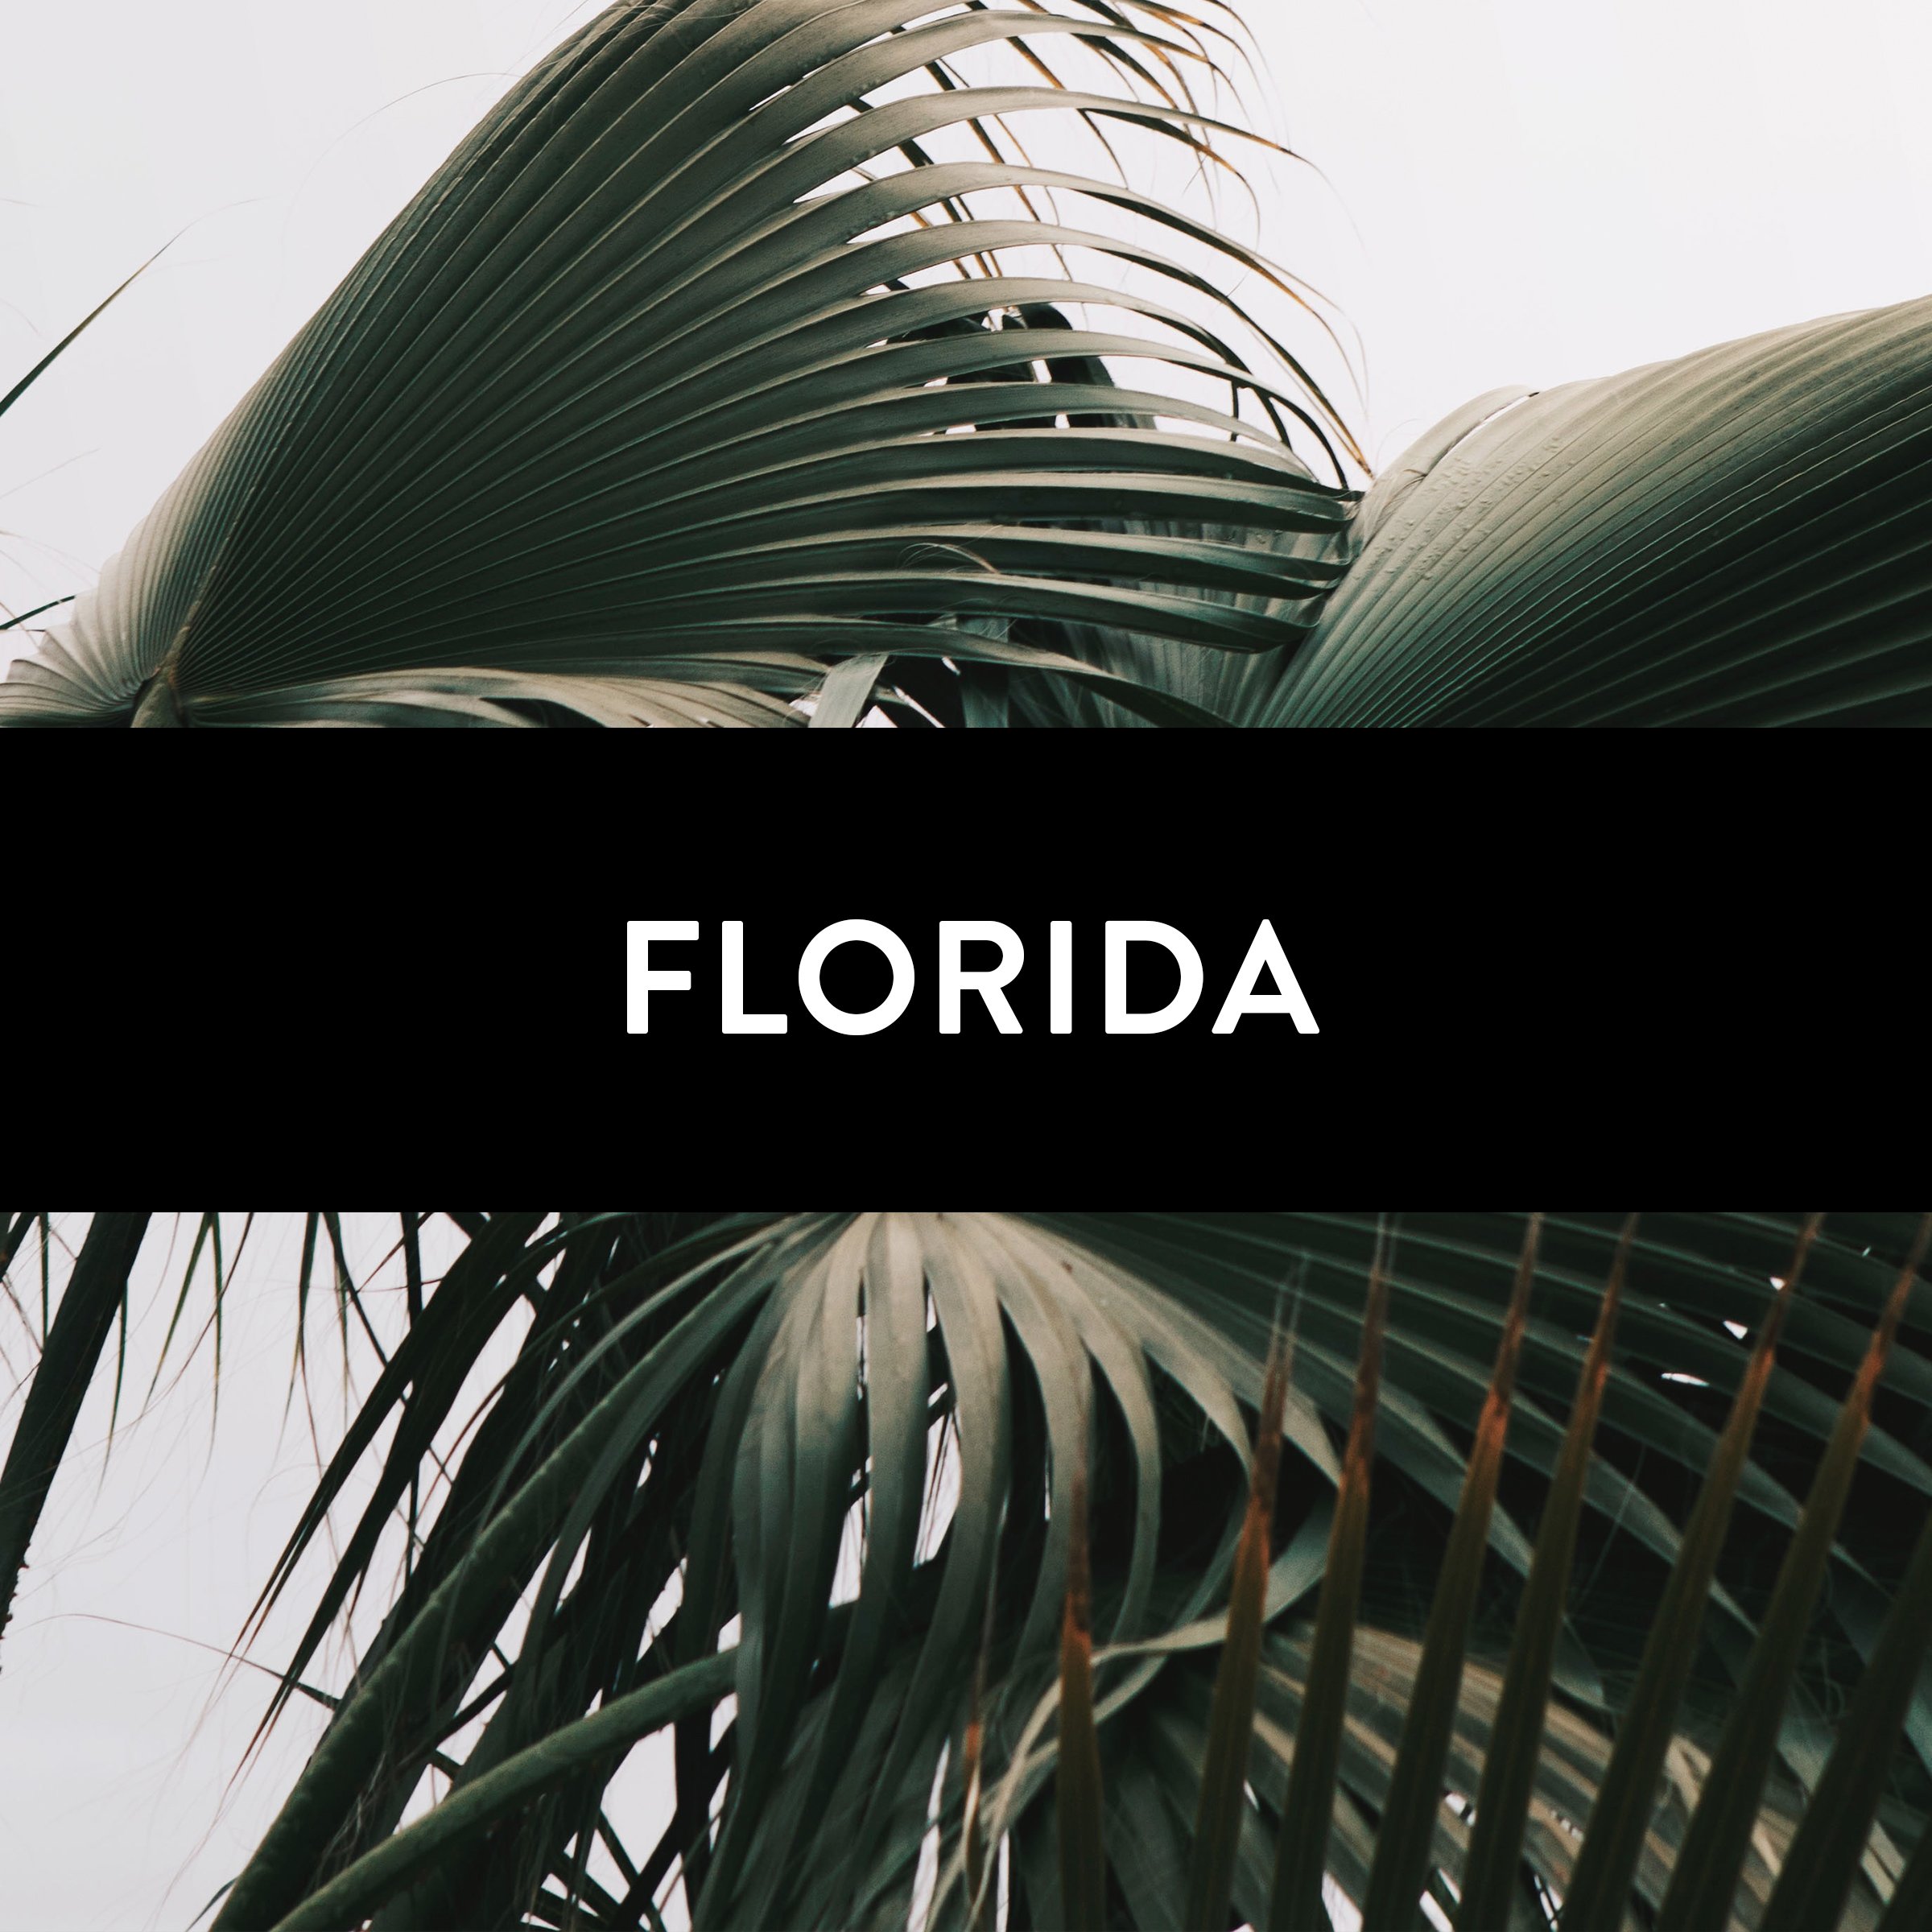 Cover - Florida.jpg